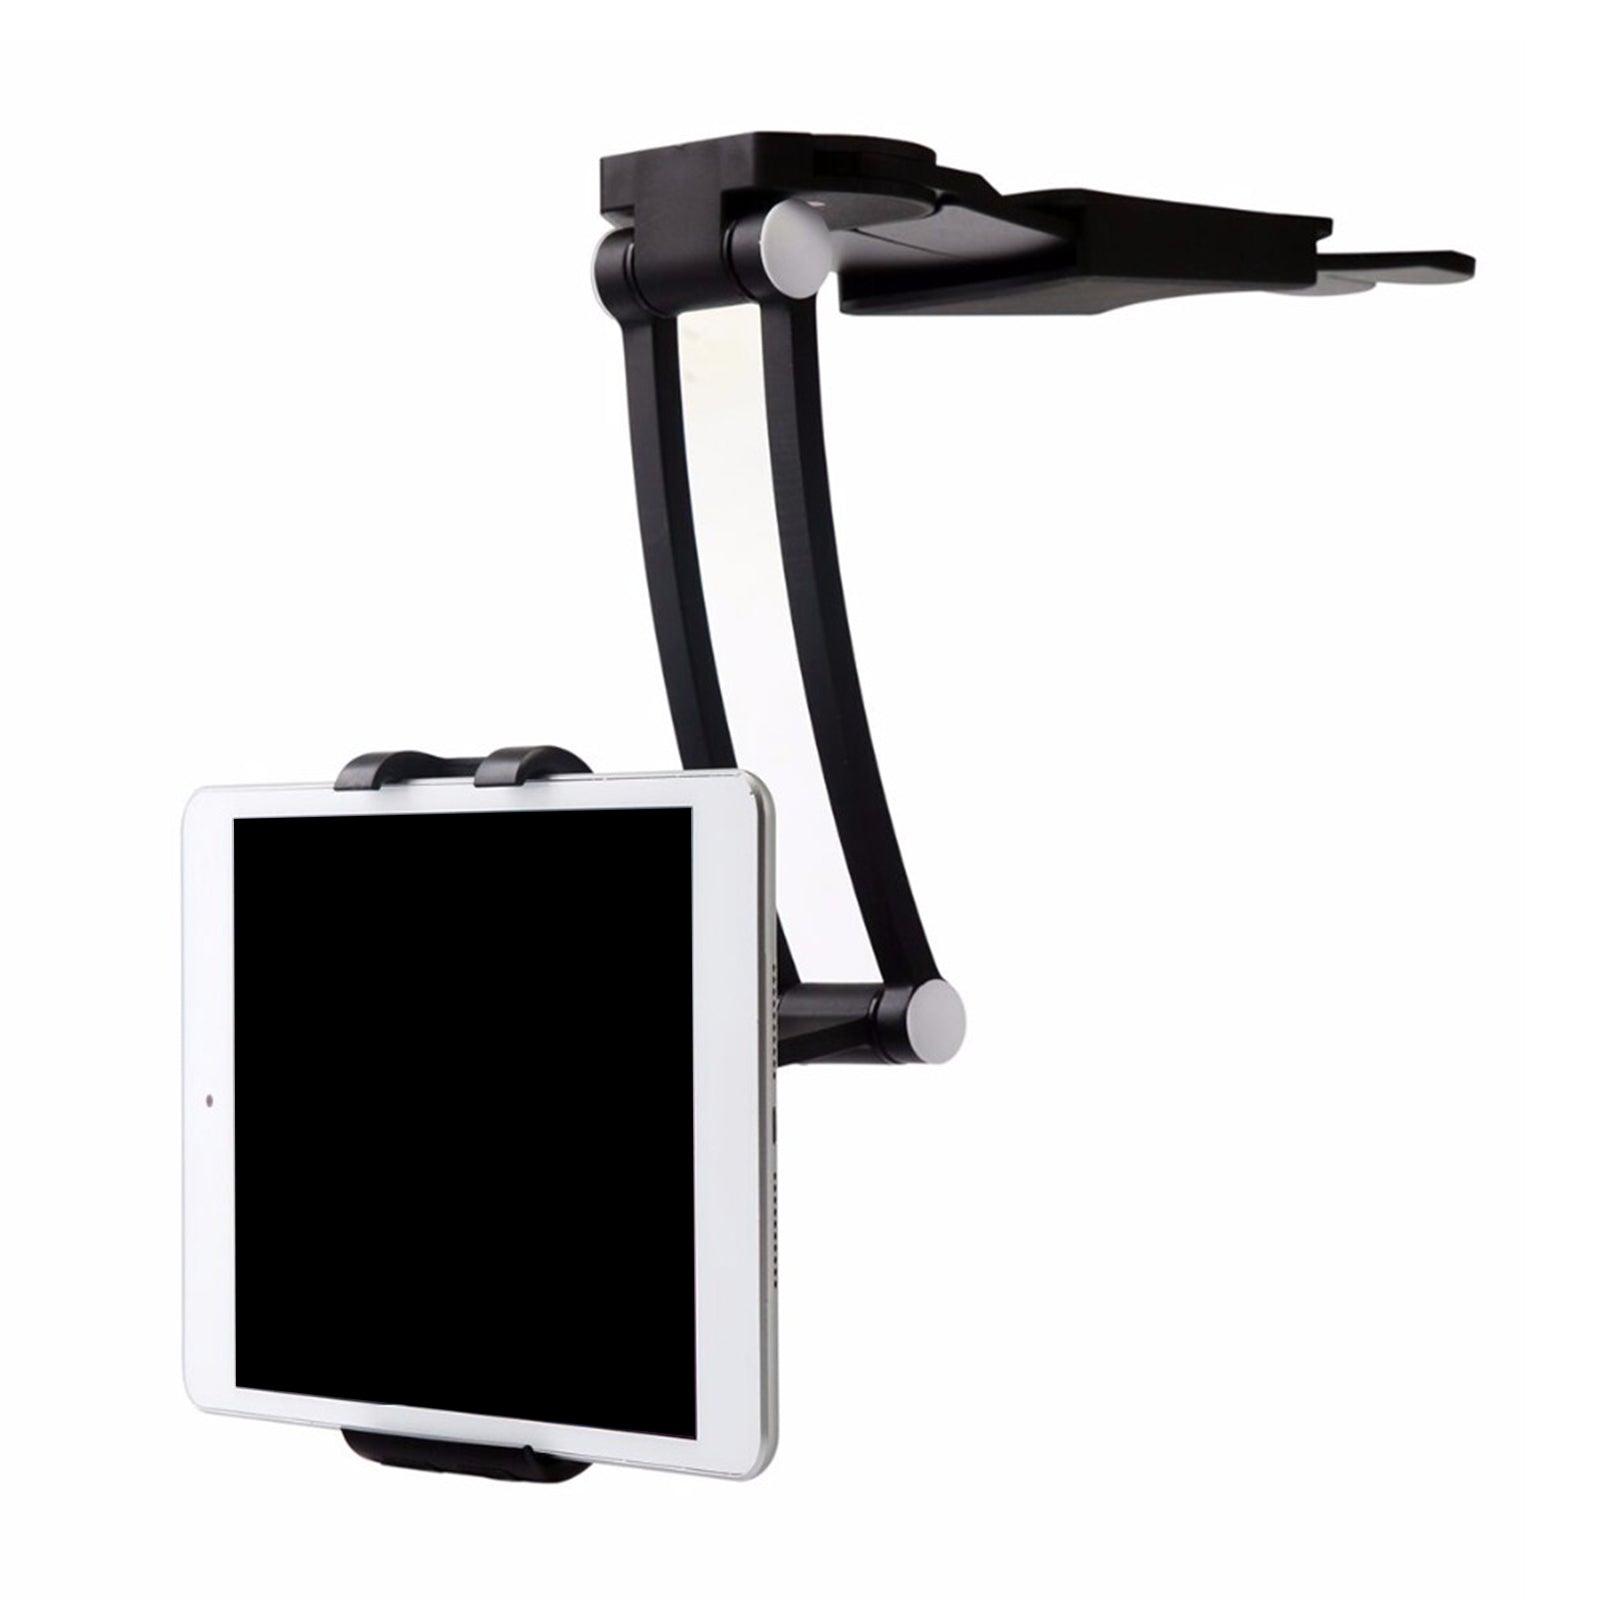 Desktop Cell Phone Tablet Holder Stand Wall Mount Counter Holder Black L